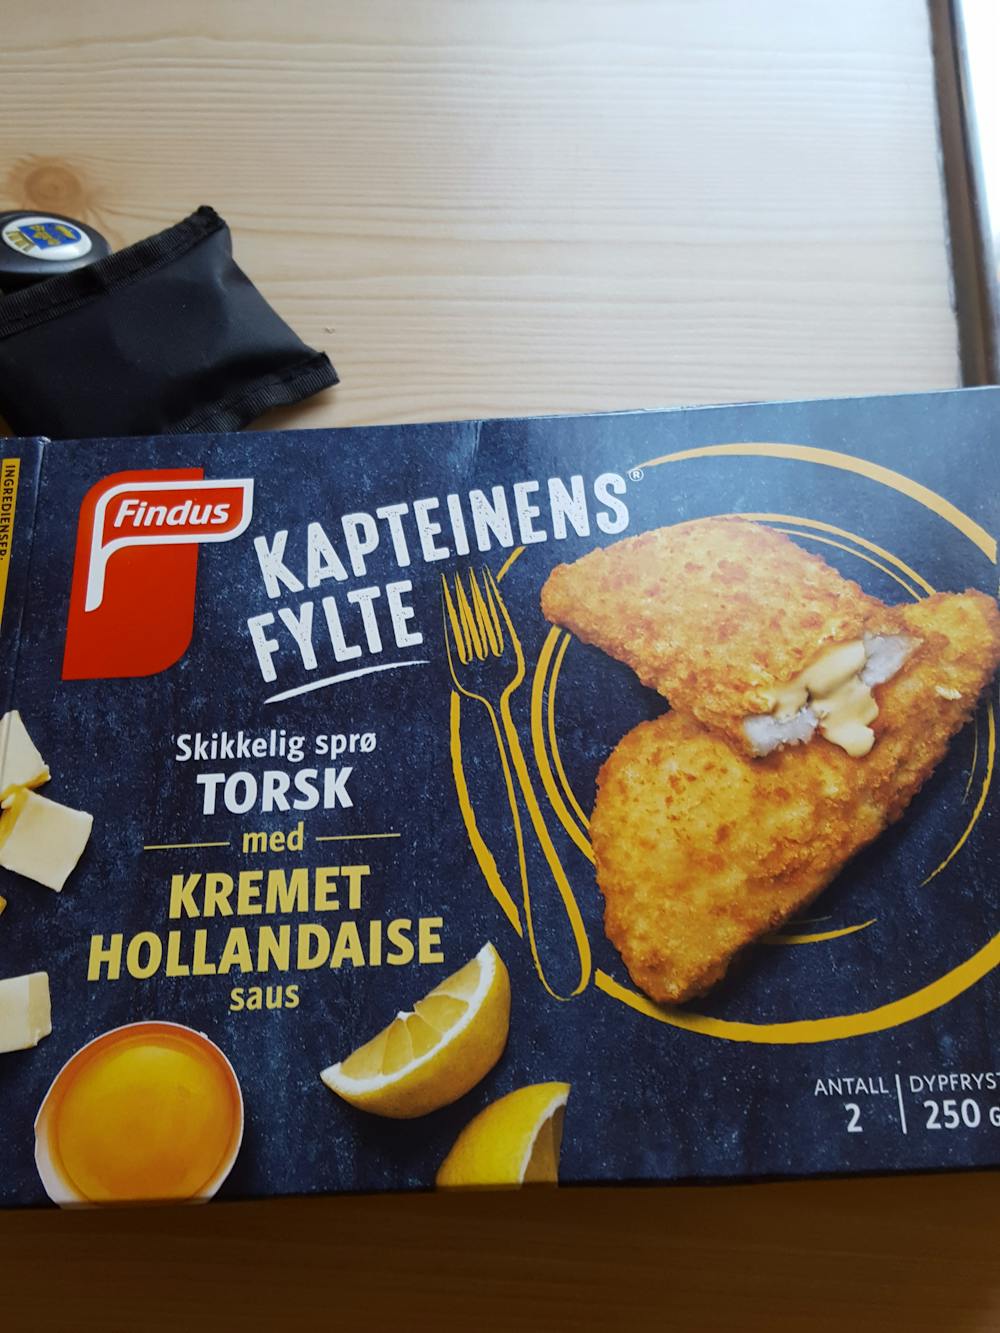 Skikkelig sprø torsk med kremet hollandaise saus, Findus